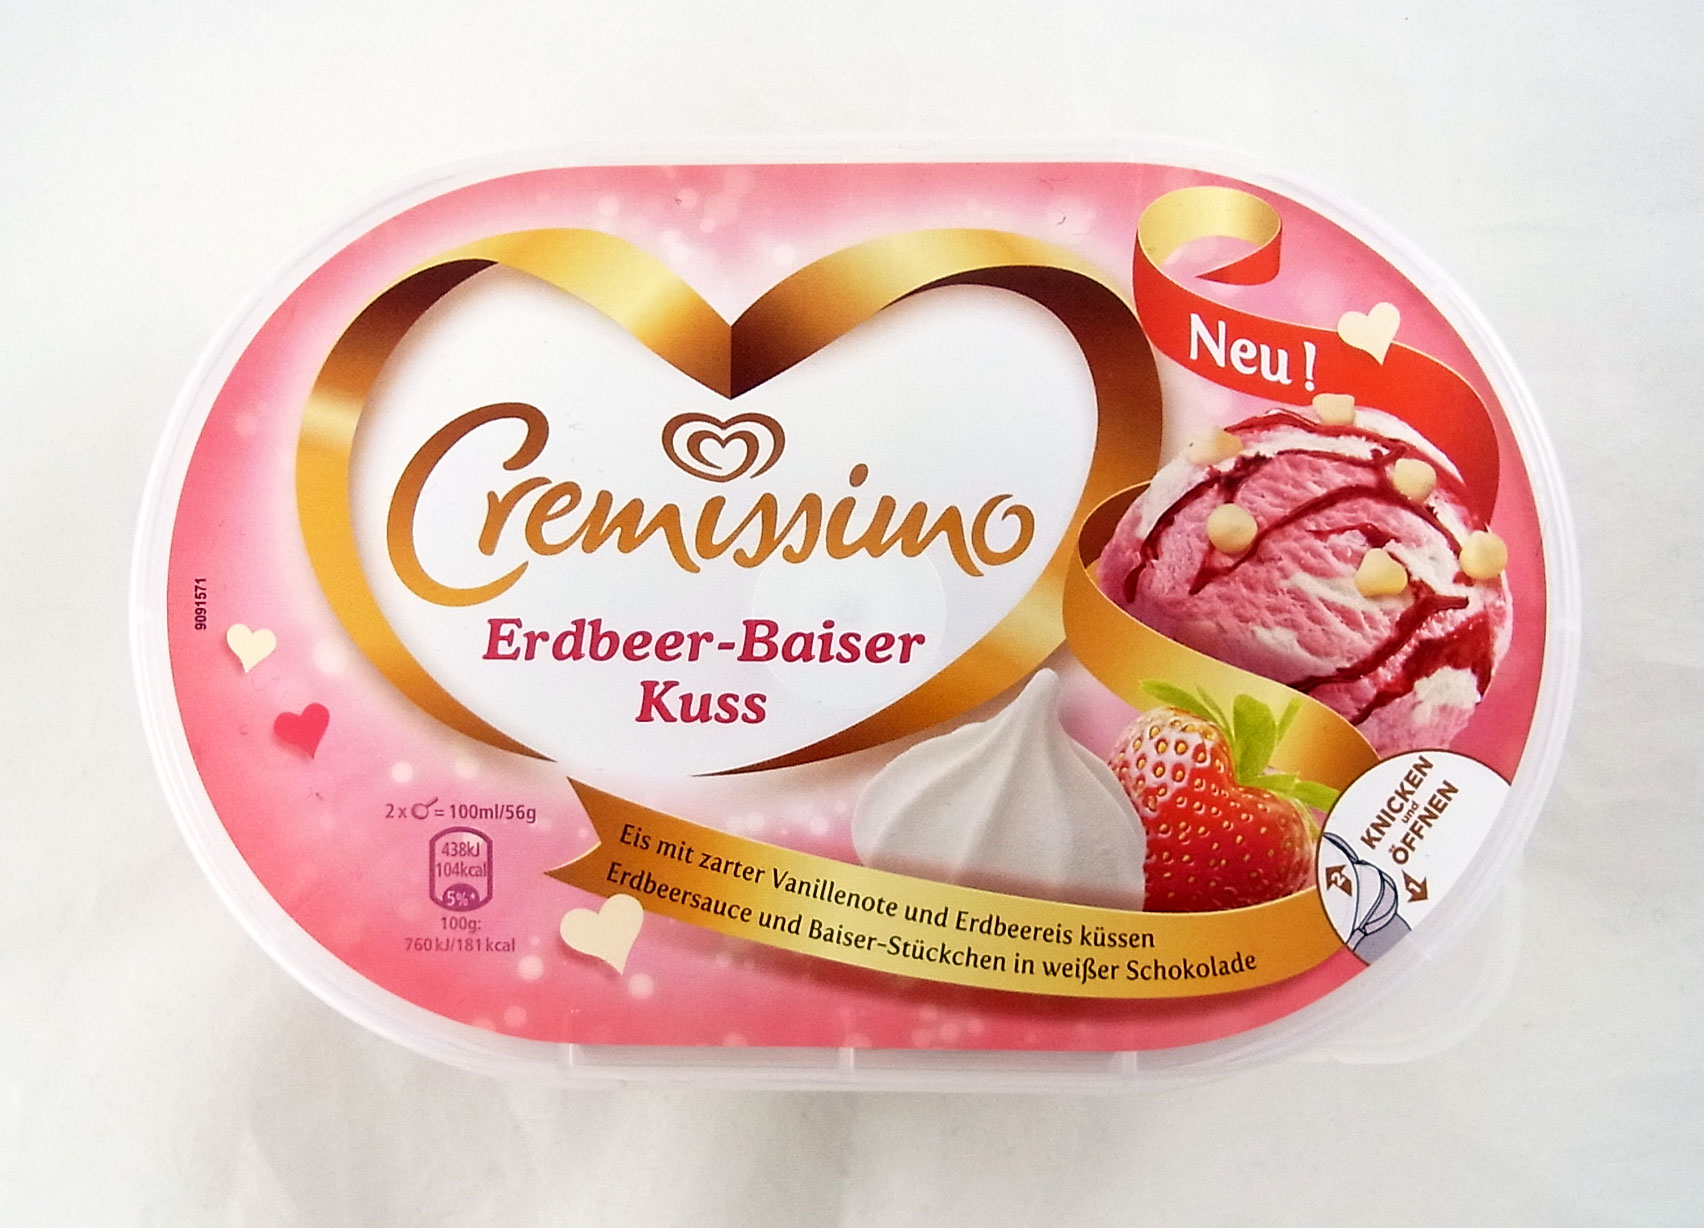 Lebensmittelklarheit Cremissimo Kuss Langnese Erdbeer-Baiser |